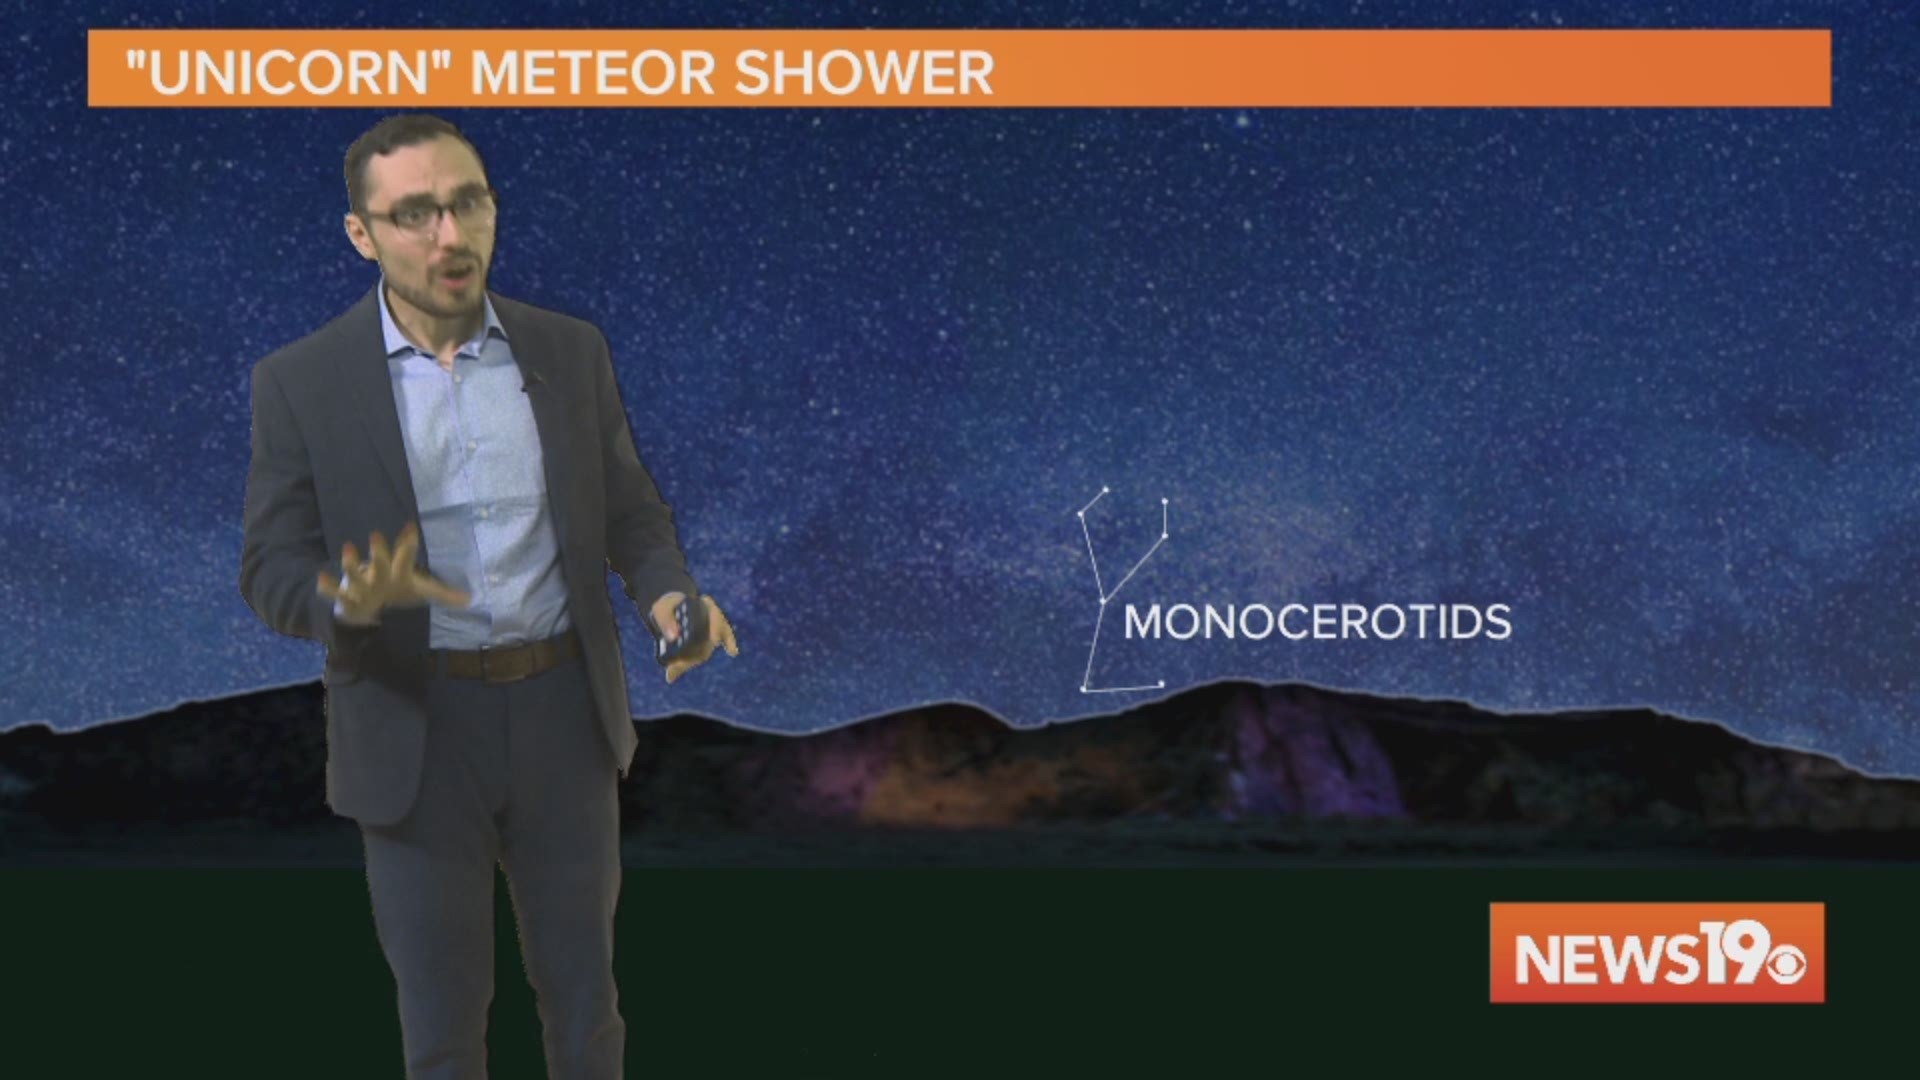 Unicorn meteor shower in South Carolina